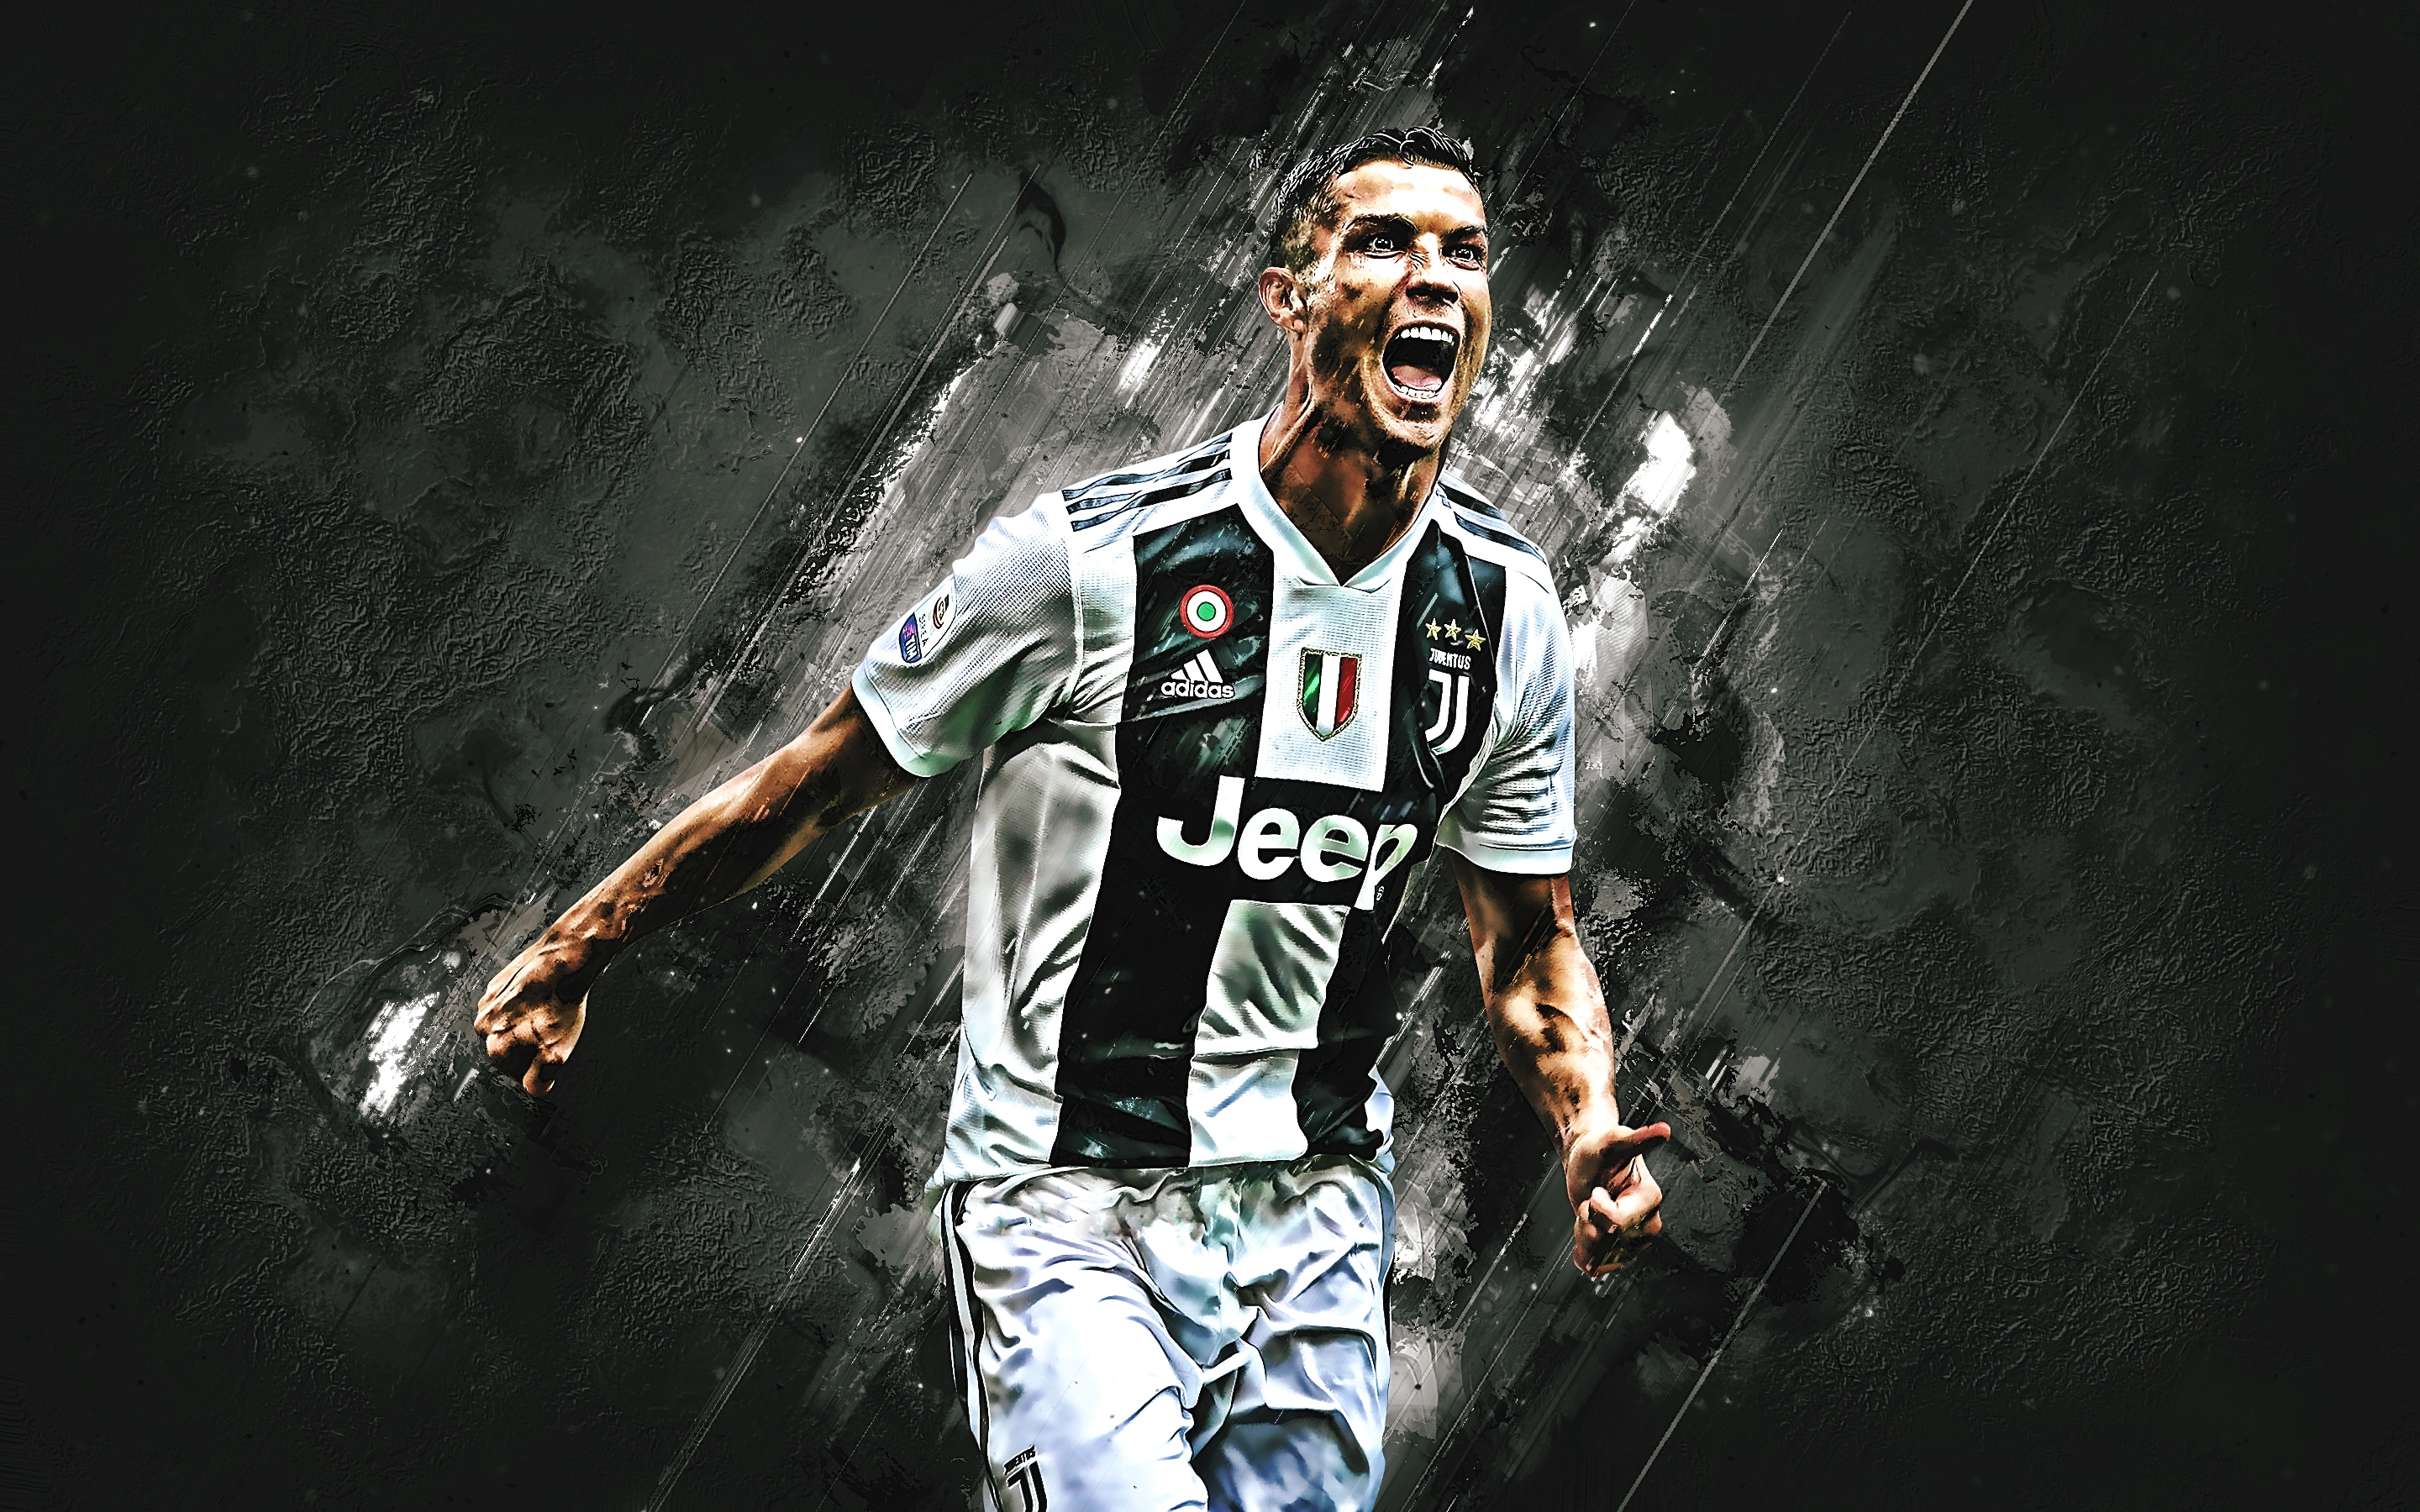 Wallpapers Cristiano Ronaldo Juventus soccer player on the desktop